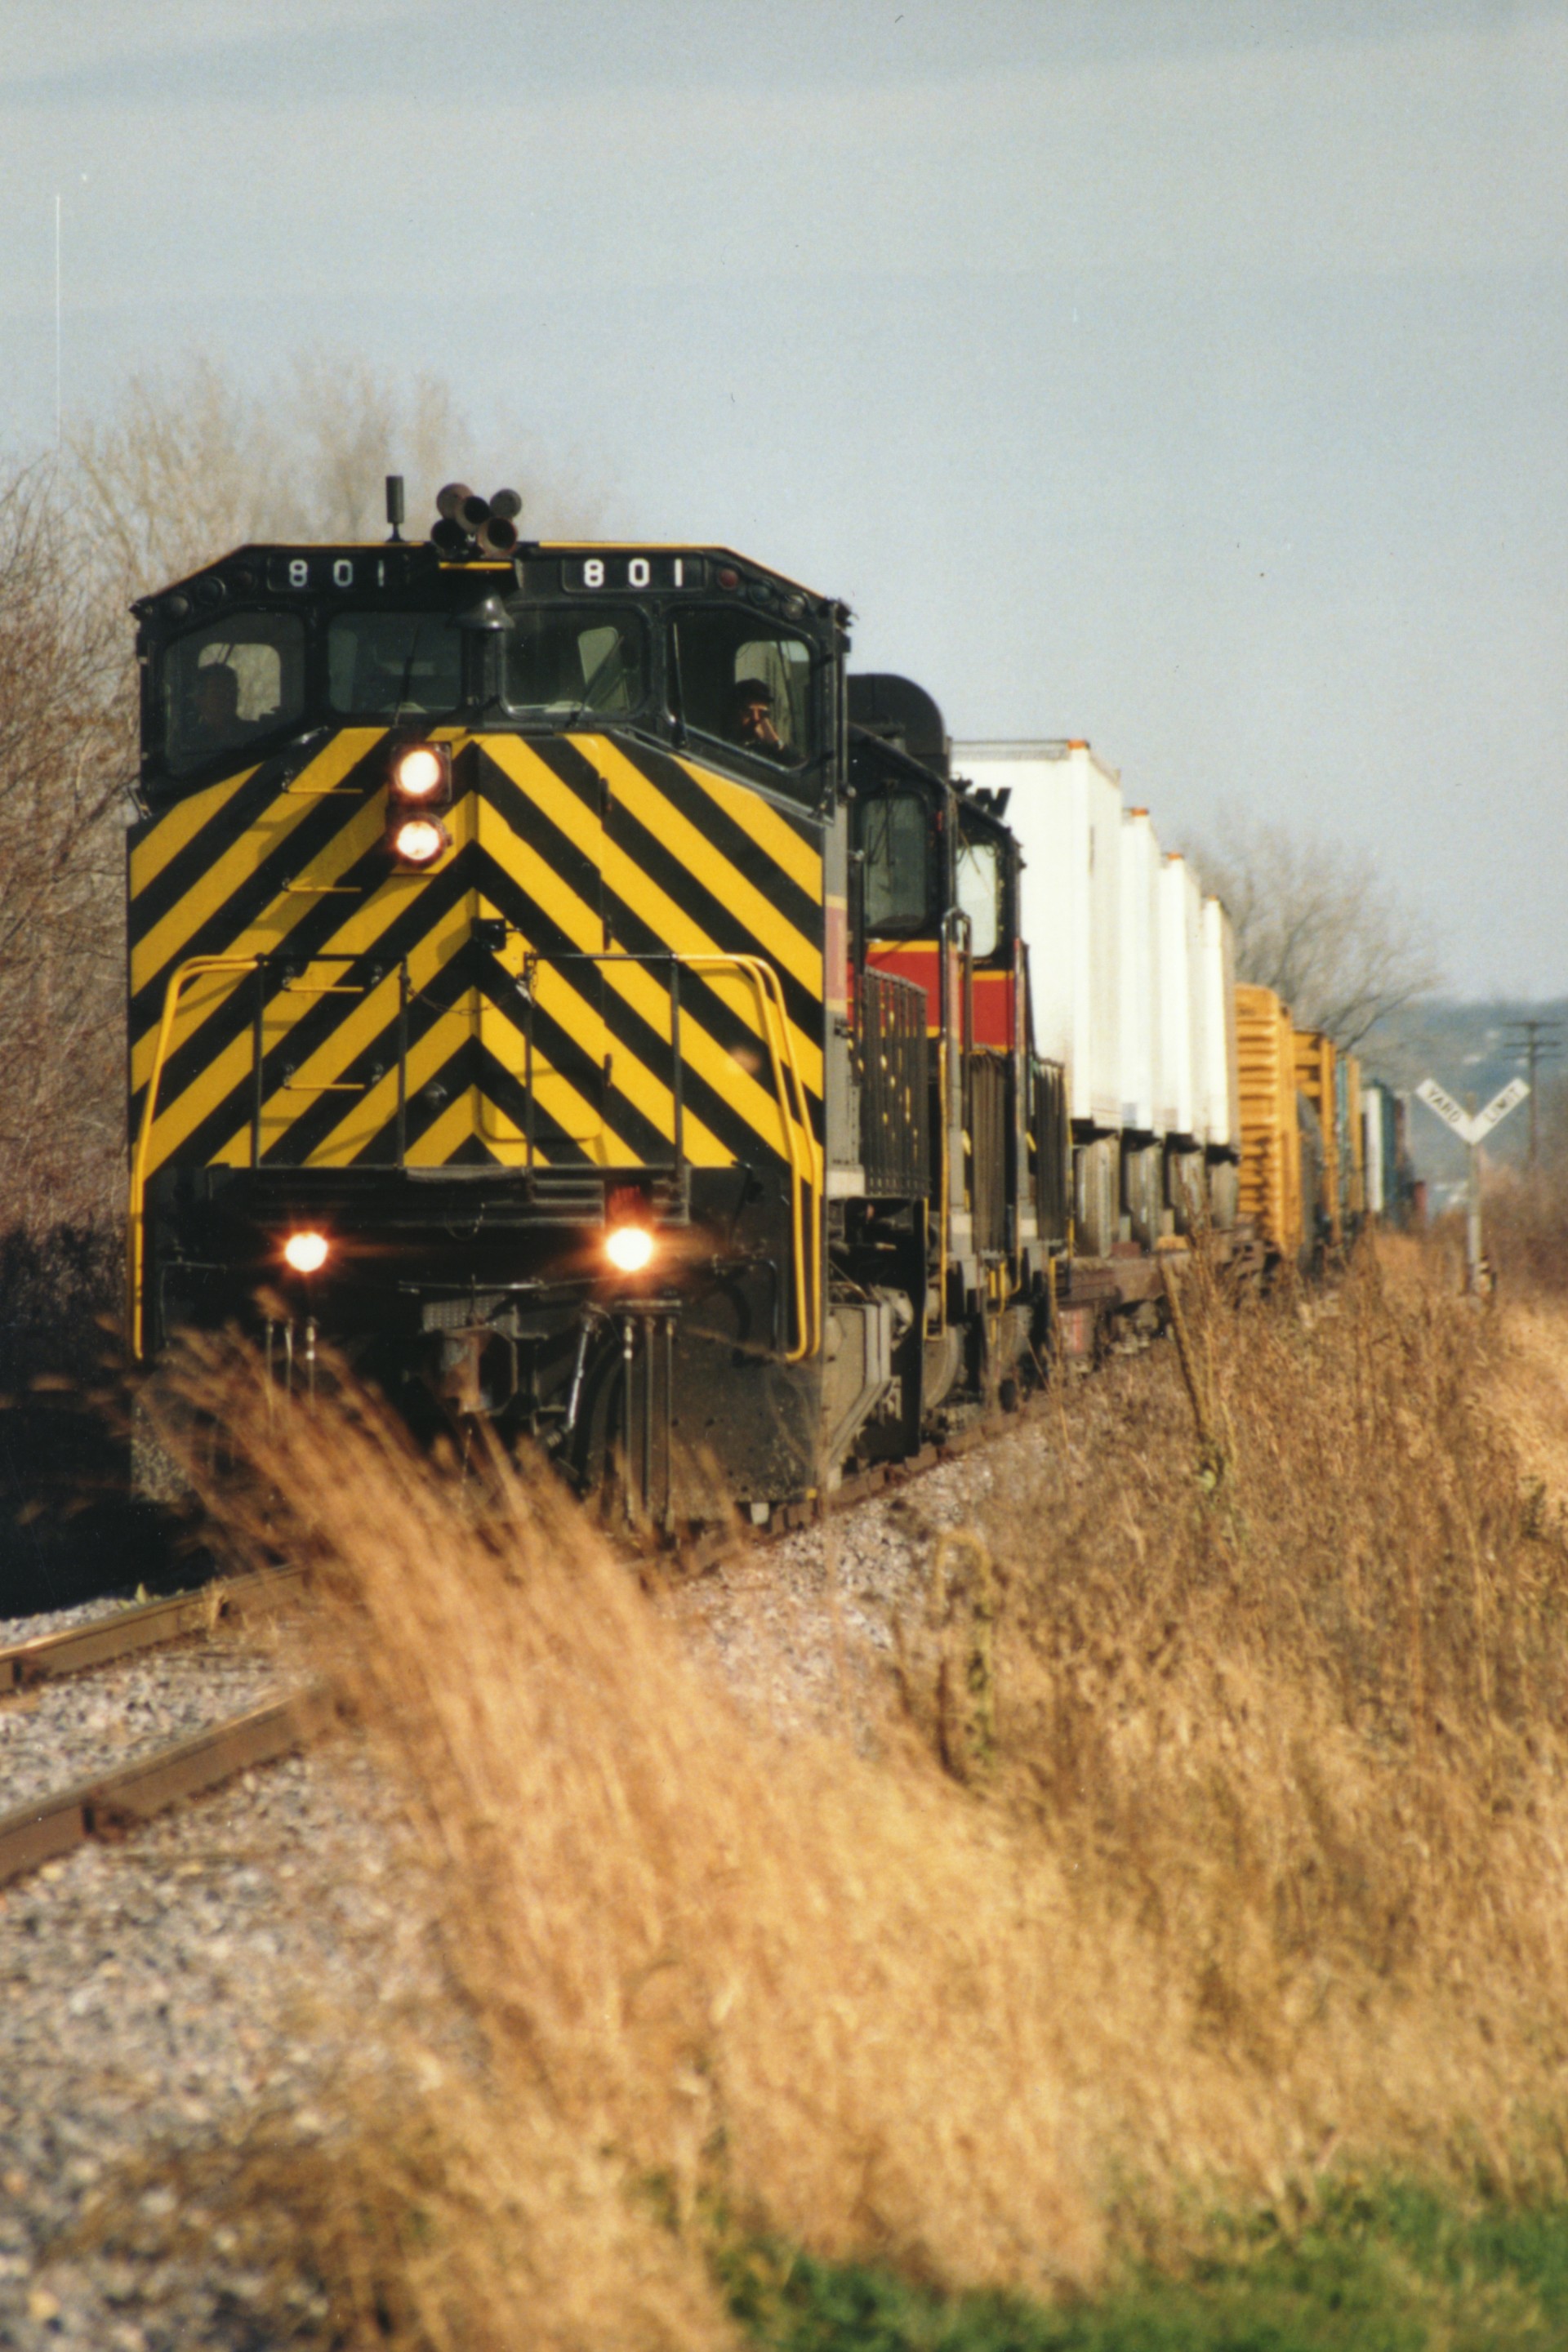 IAIS 801 at West Des Moines, IA on 17-Nov-1994